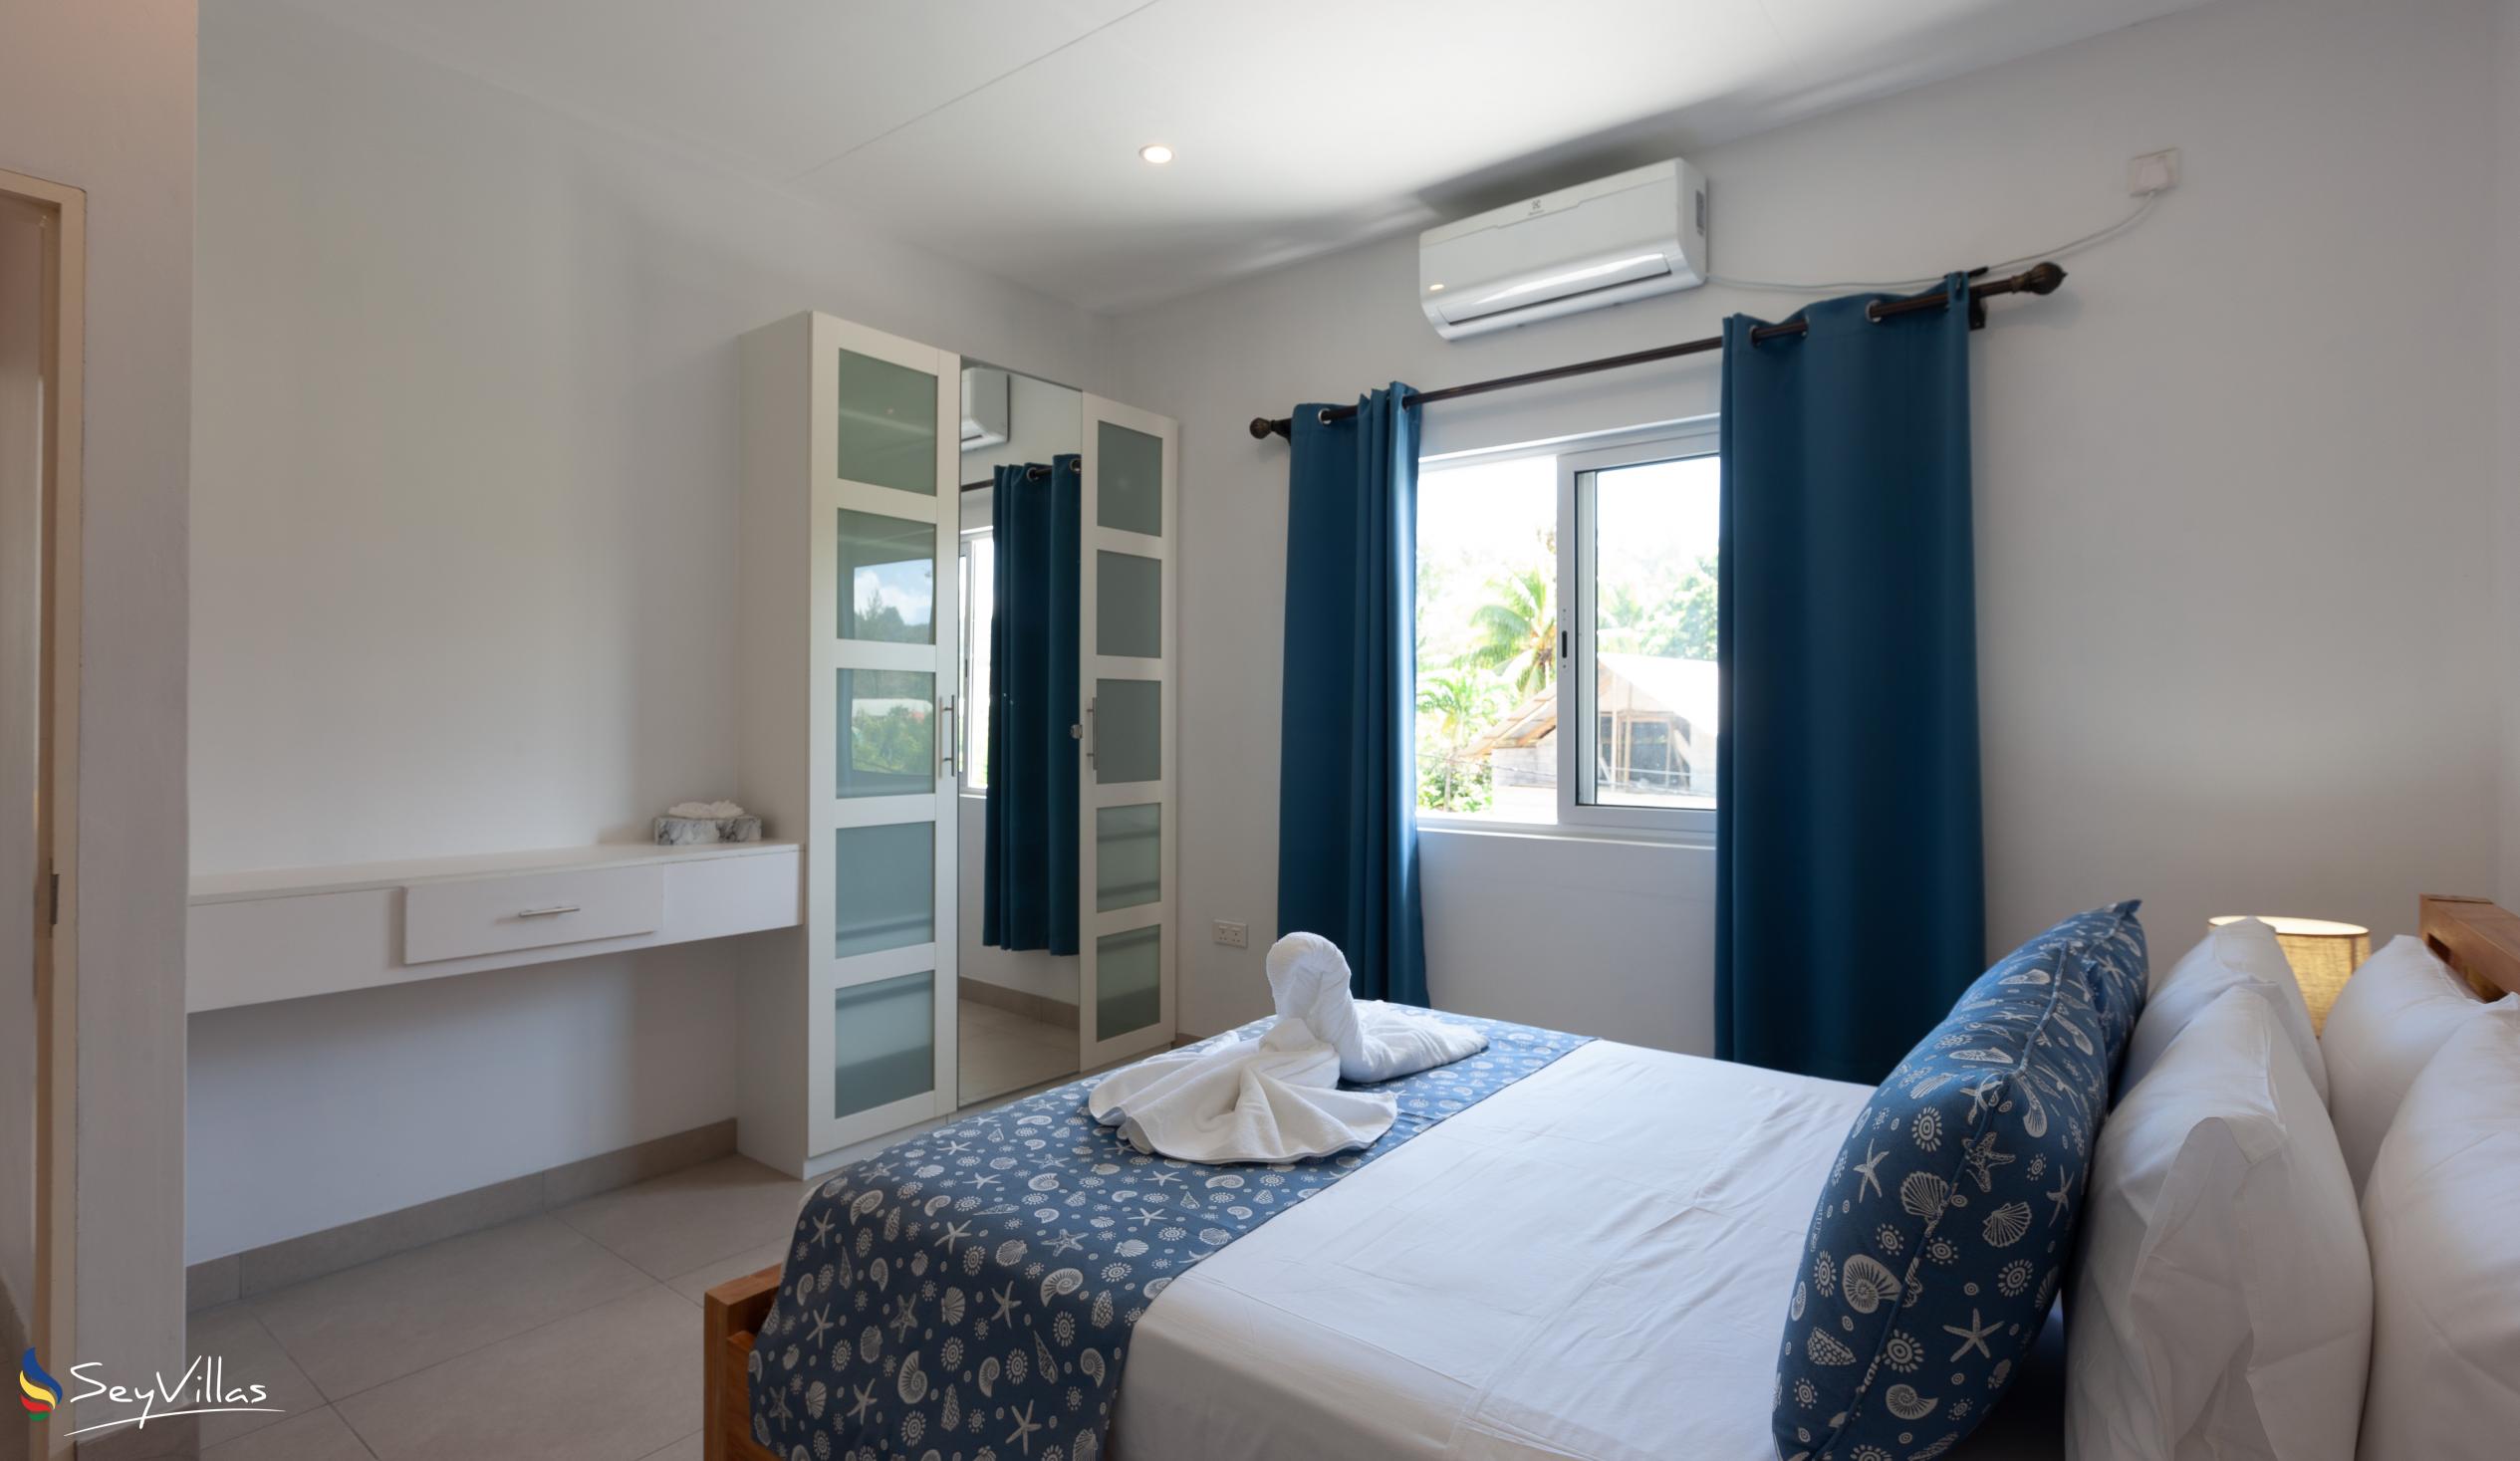 Foto 48: Maison Marie-Jeanne - Appartement 4 chambres - Praslin (Seychelles)